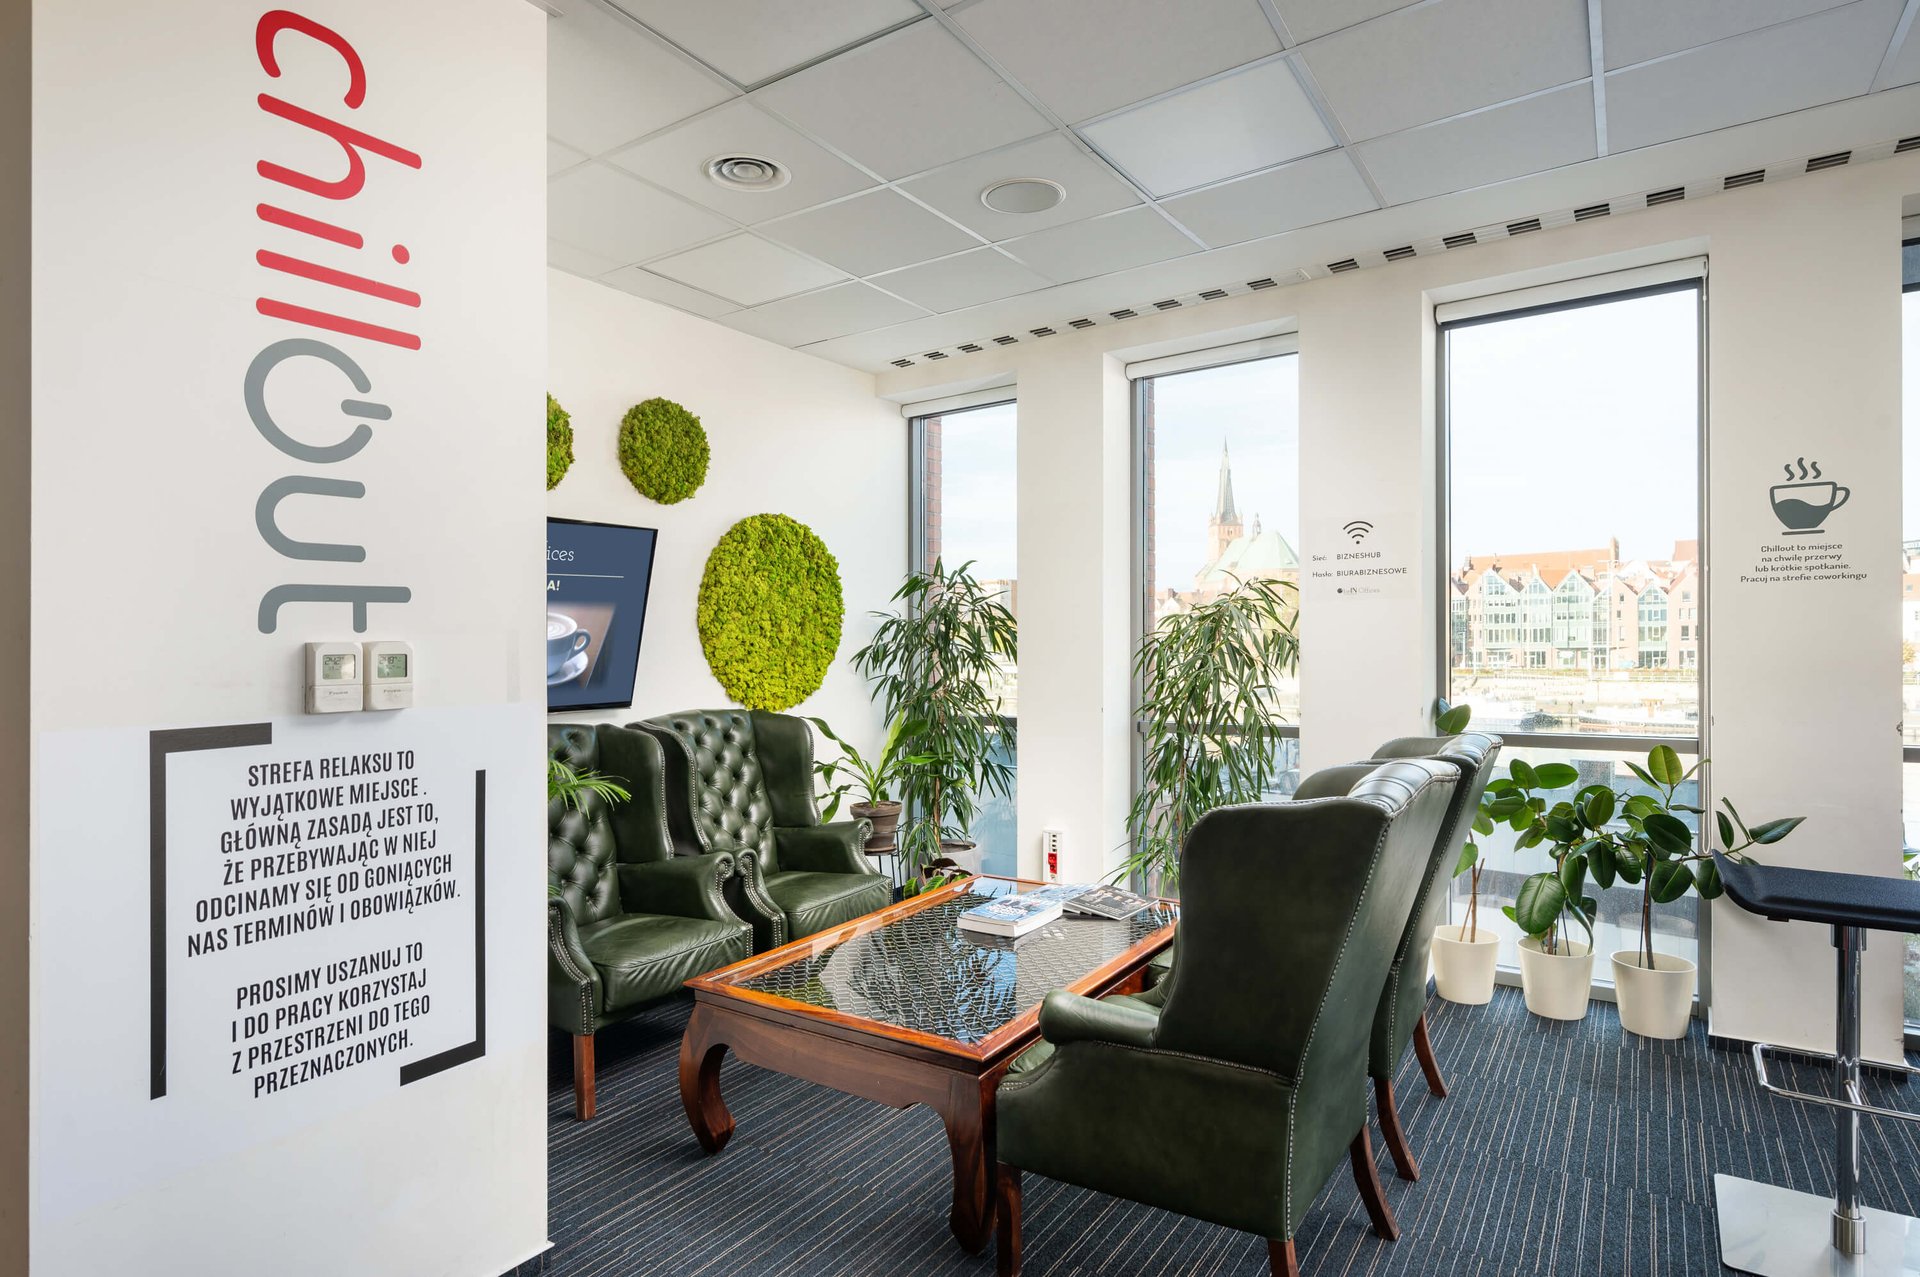 Wnętrza Lastadia Office beIN Offices powered by BiznesHub